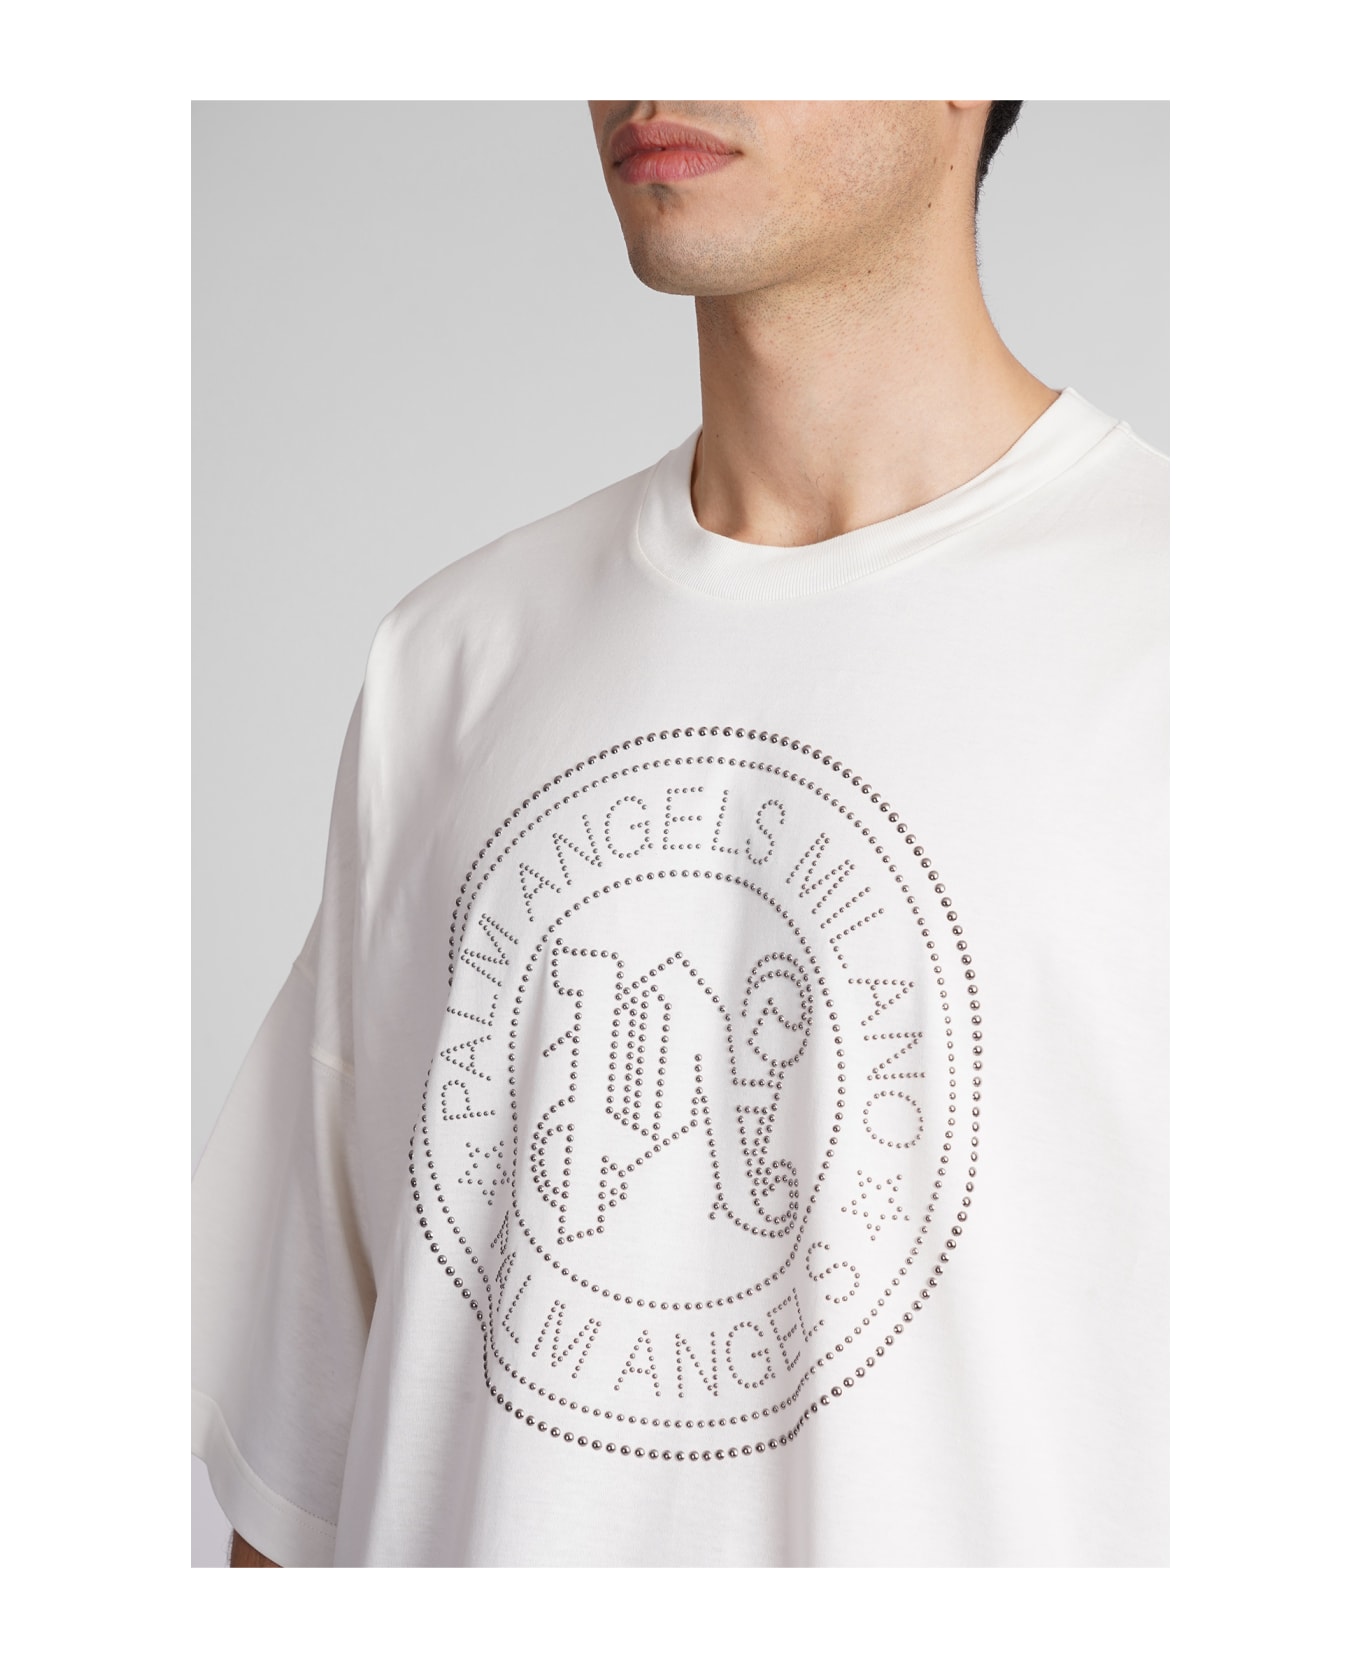 Palm Angels Milano T-shirt - WHITE